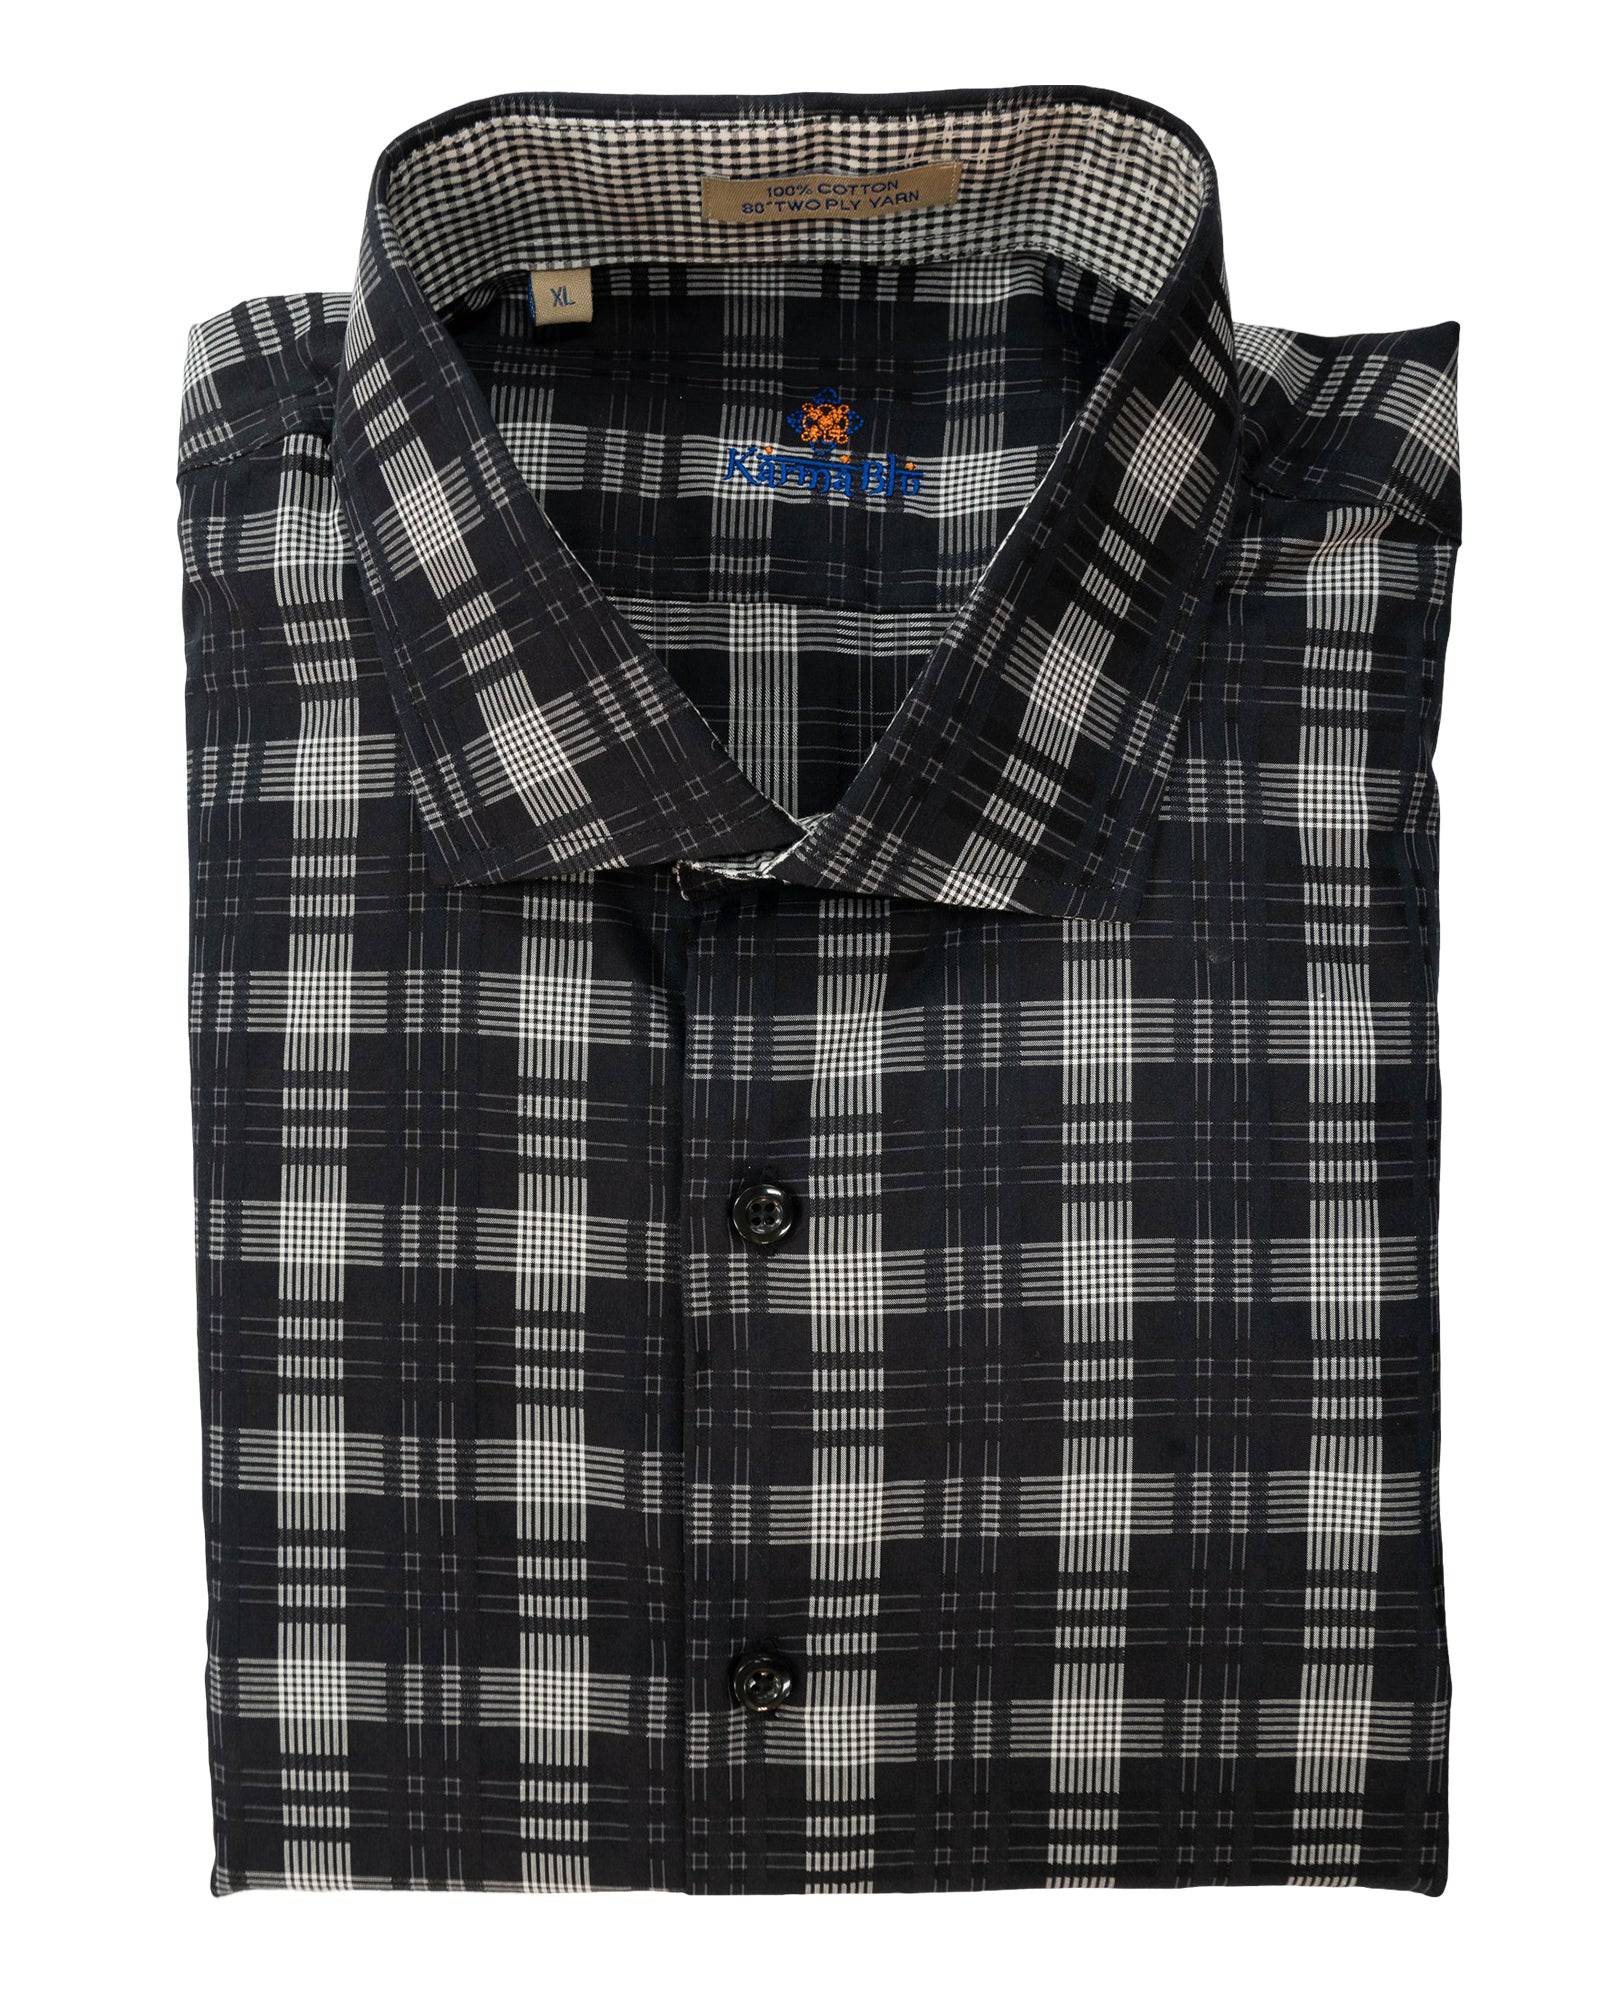 Karma Blu Black Plaid Sport Shirt - Rainwater's Men's Clothing and Tuxedo Rental